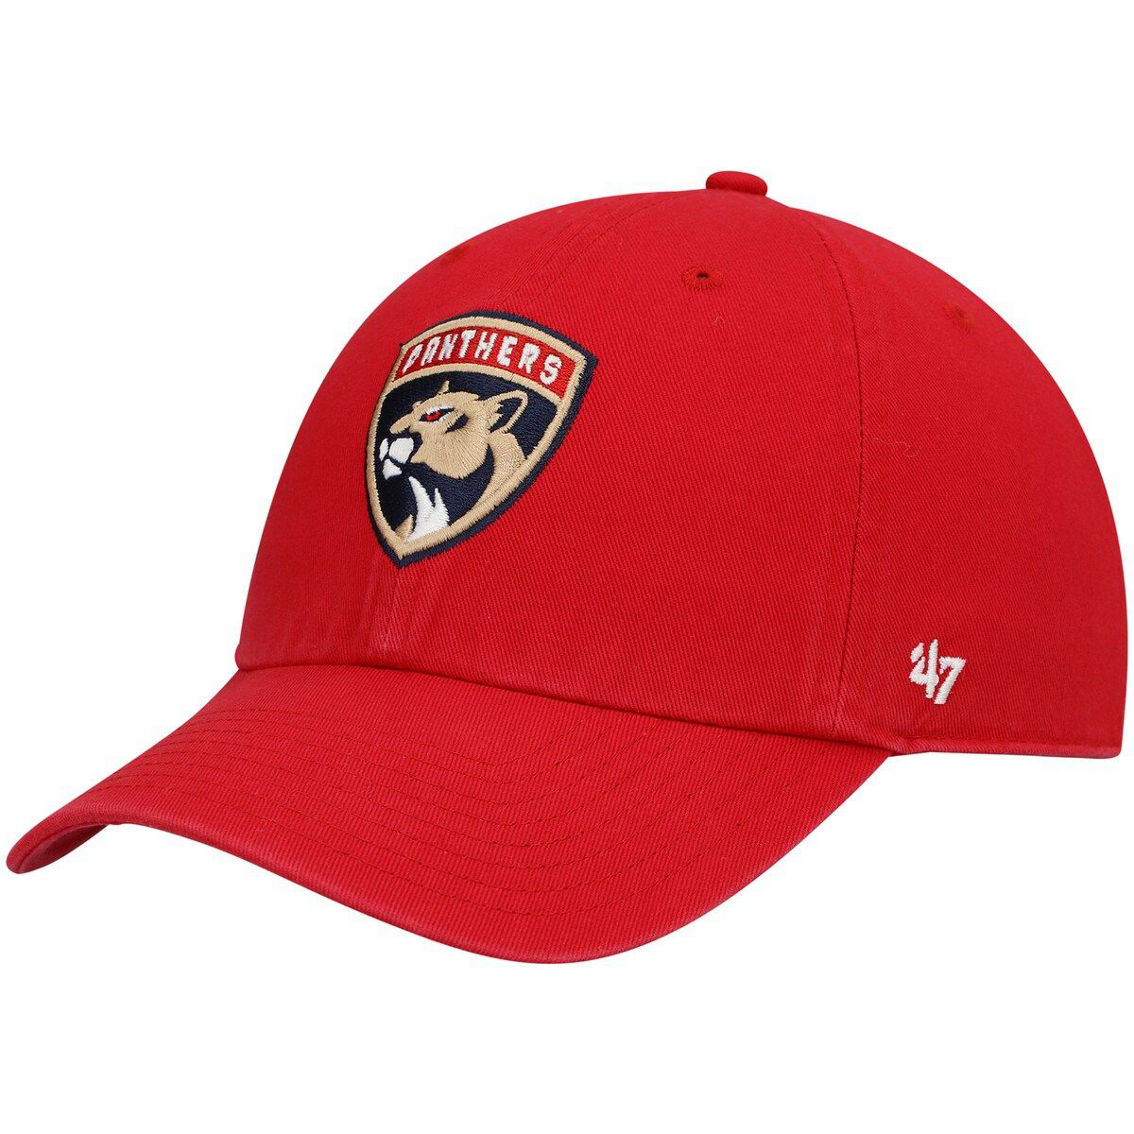 '47 Men's Red Florida Panthers Logo Clean Up Adjustable Hat - Image 2 of 4